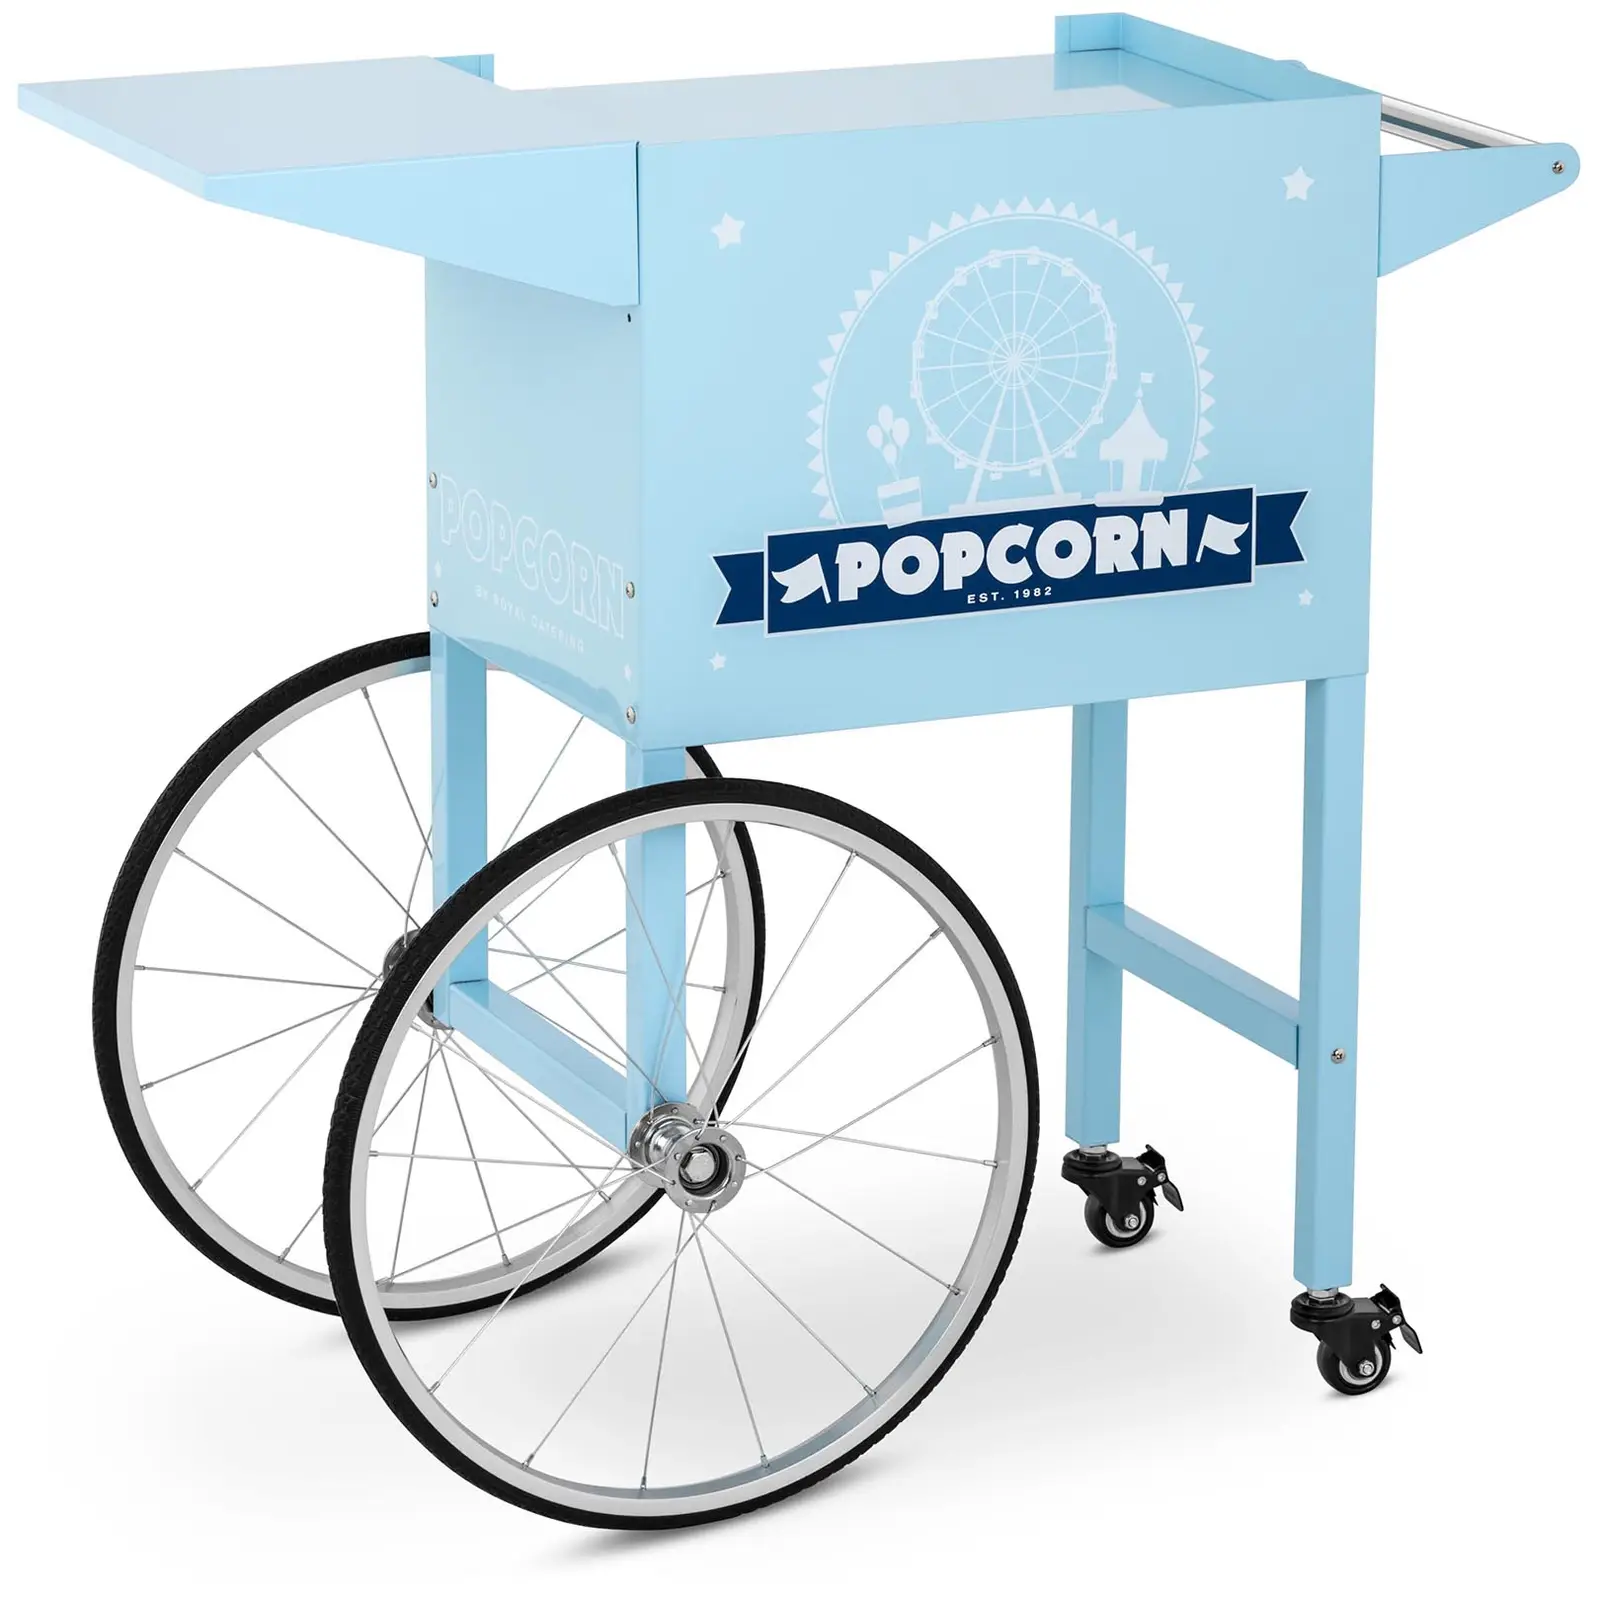 Vozík na stroj na popcorn modrý - Stroje na popcorn Royal Catering